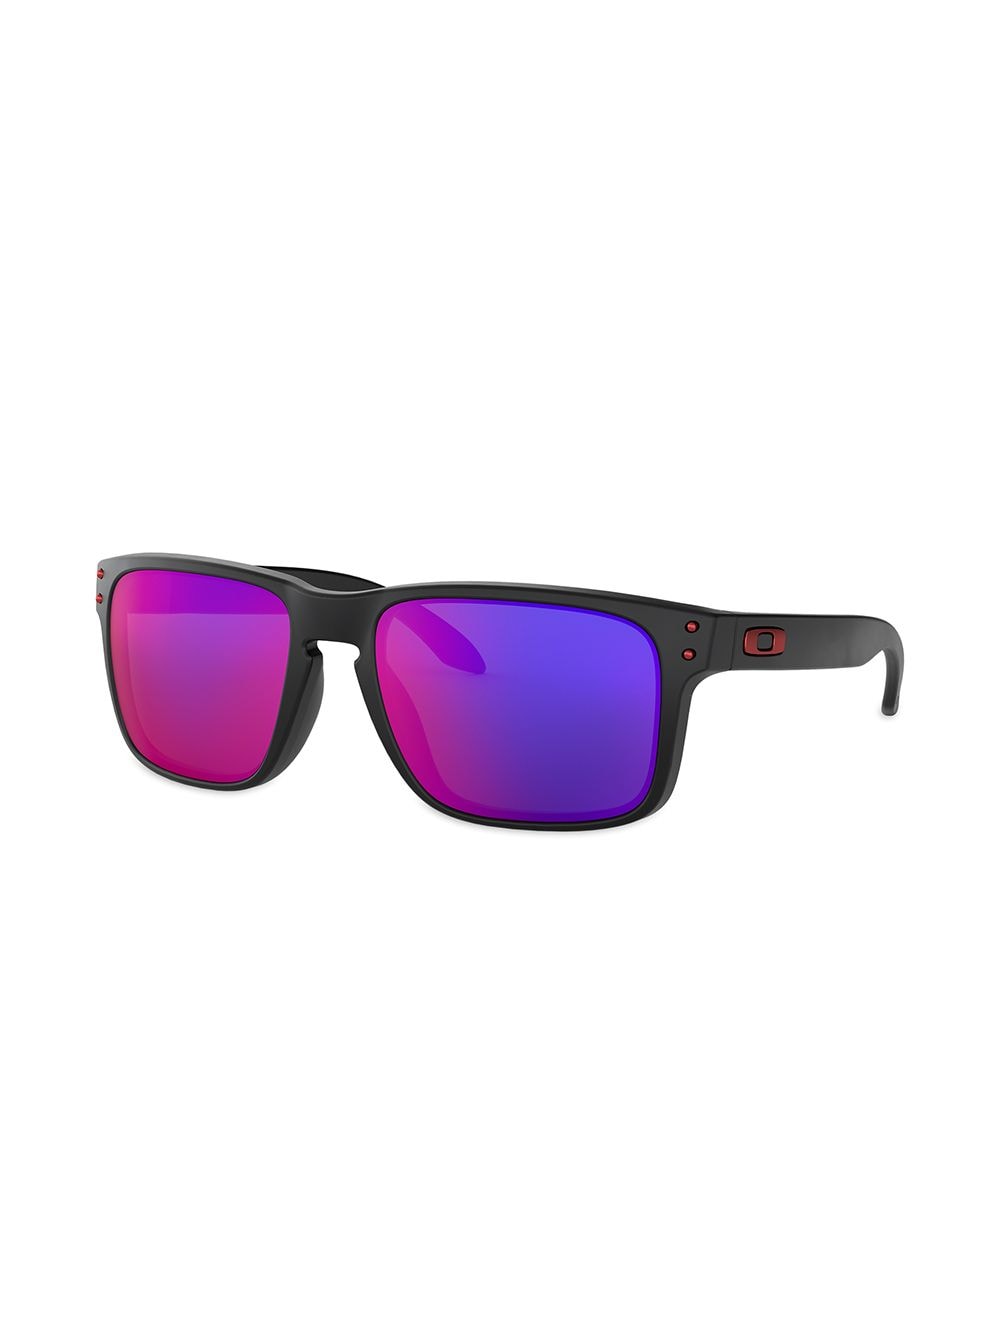 Black/blue Holbrook square sunglasses